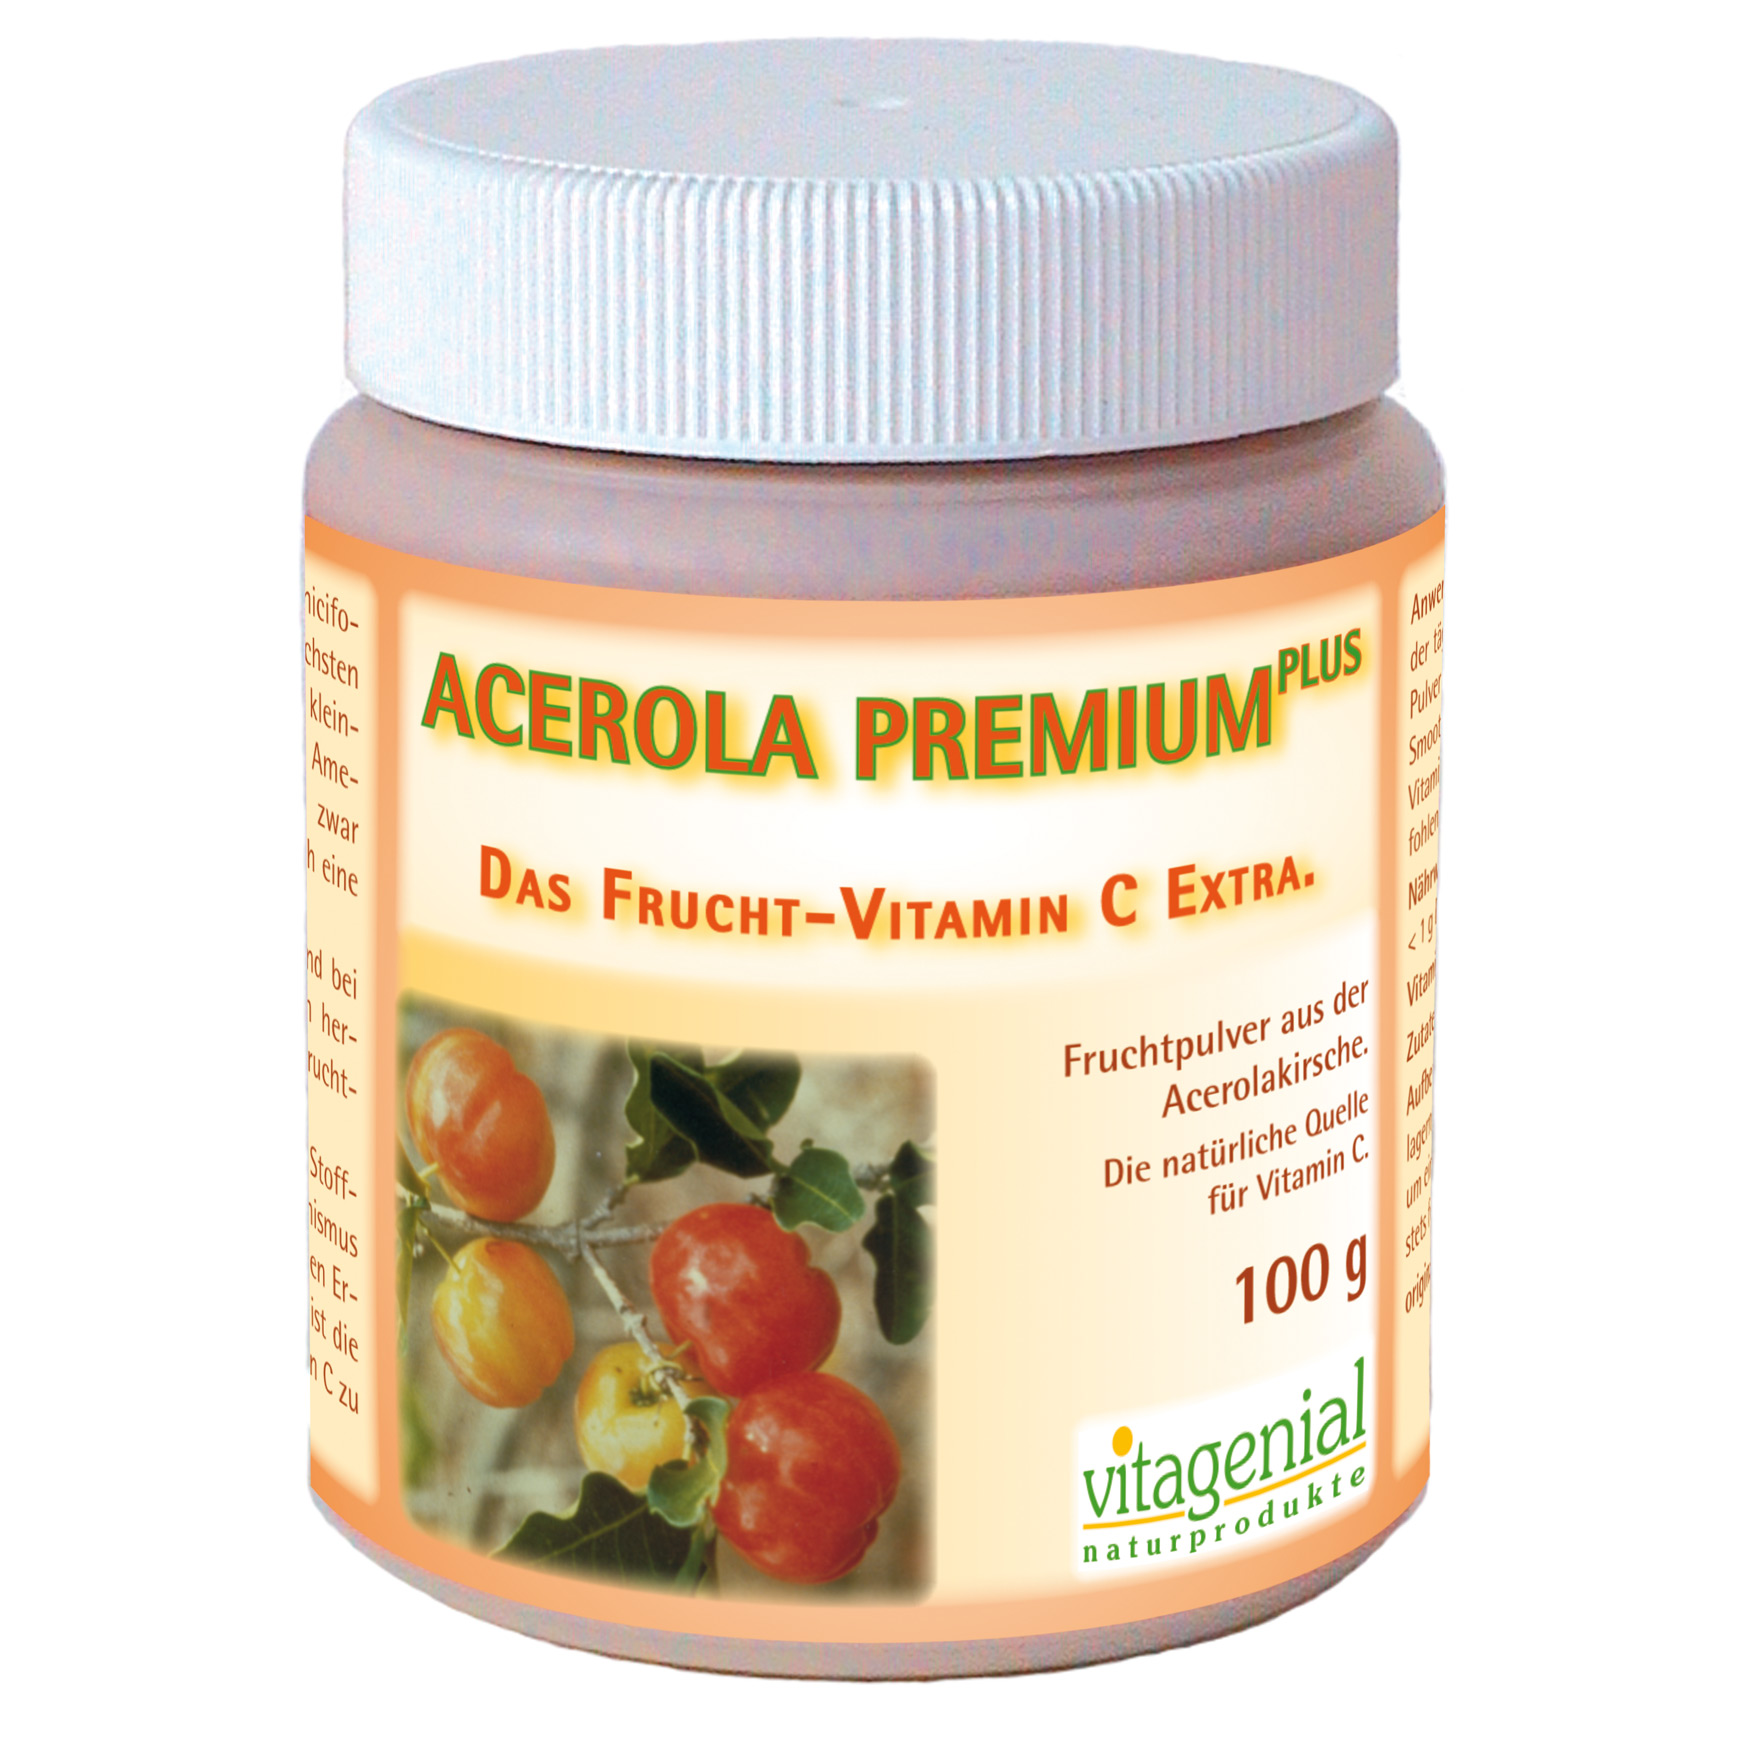 Acerola Premium Plus Vitagenial in der 100 Gramm Version